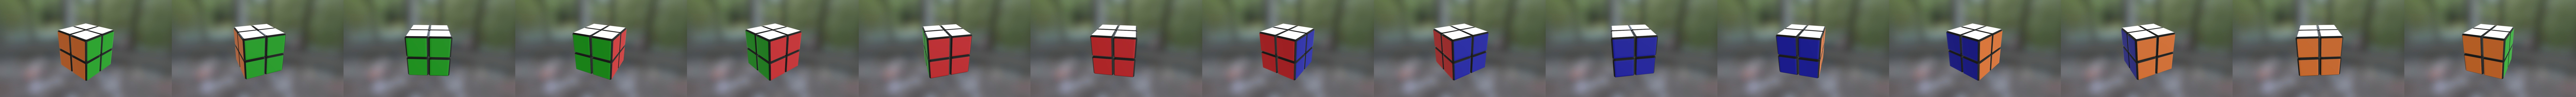 Rubik S Cube 2x2 Black Download Free 3d Model By Ayunfat Ayunfat B3579a6 Sketchfab - rabdoms models 2 rubiks cube roblox